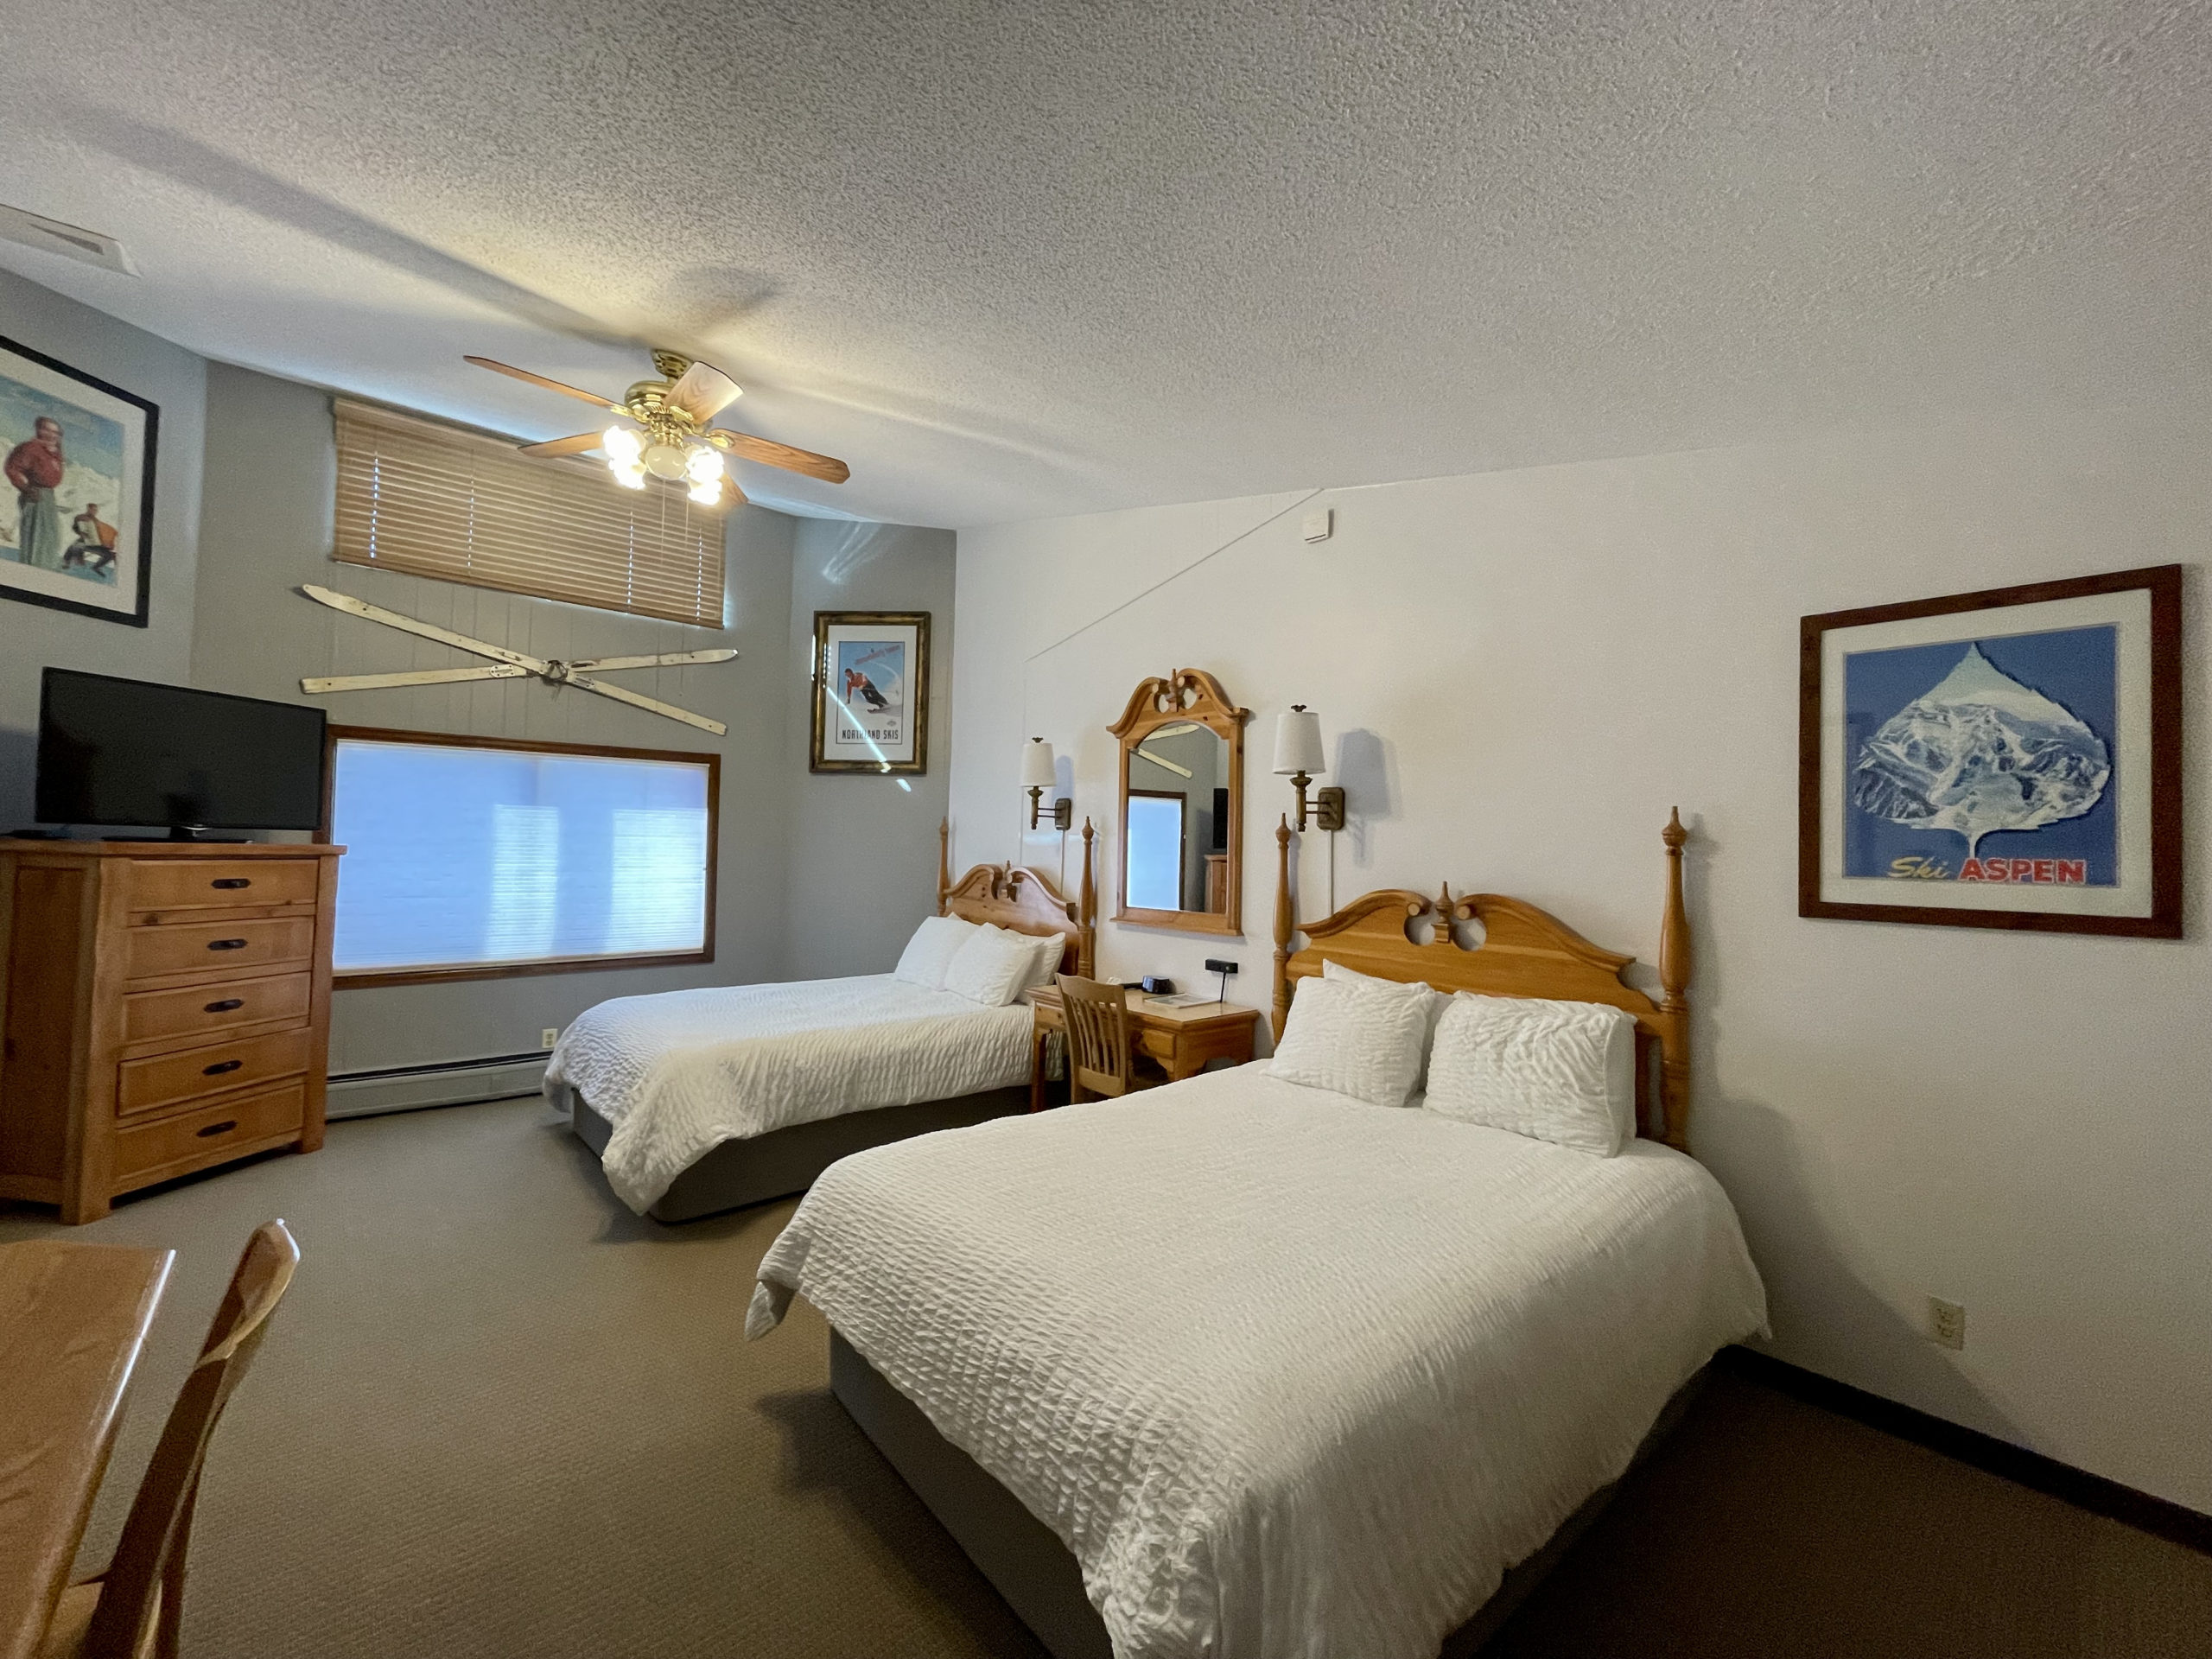 Tyrolean Lodge Room 302